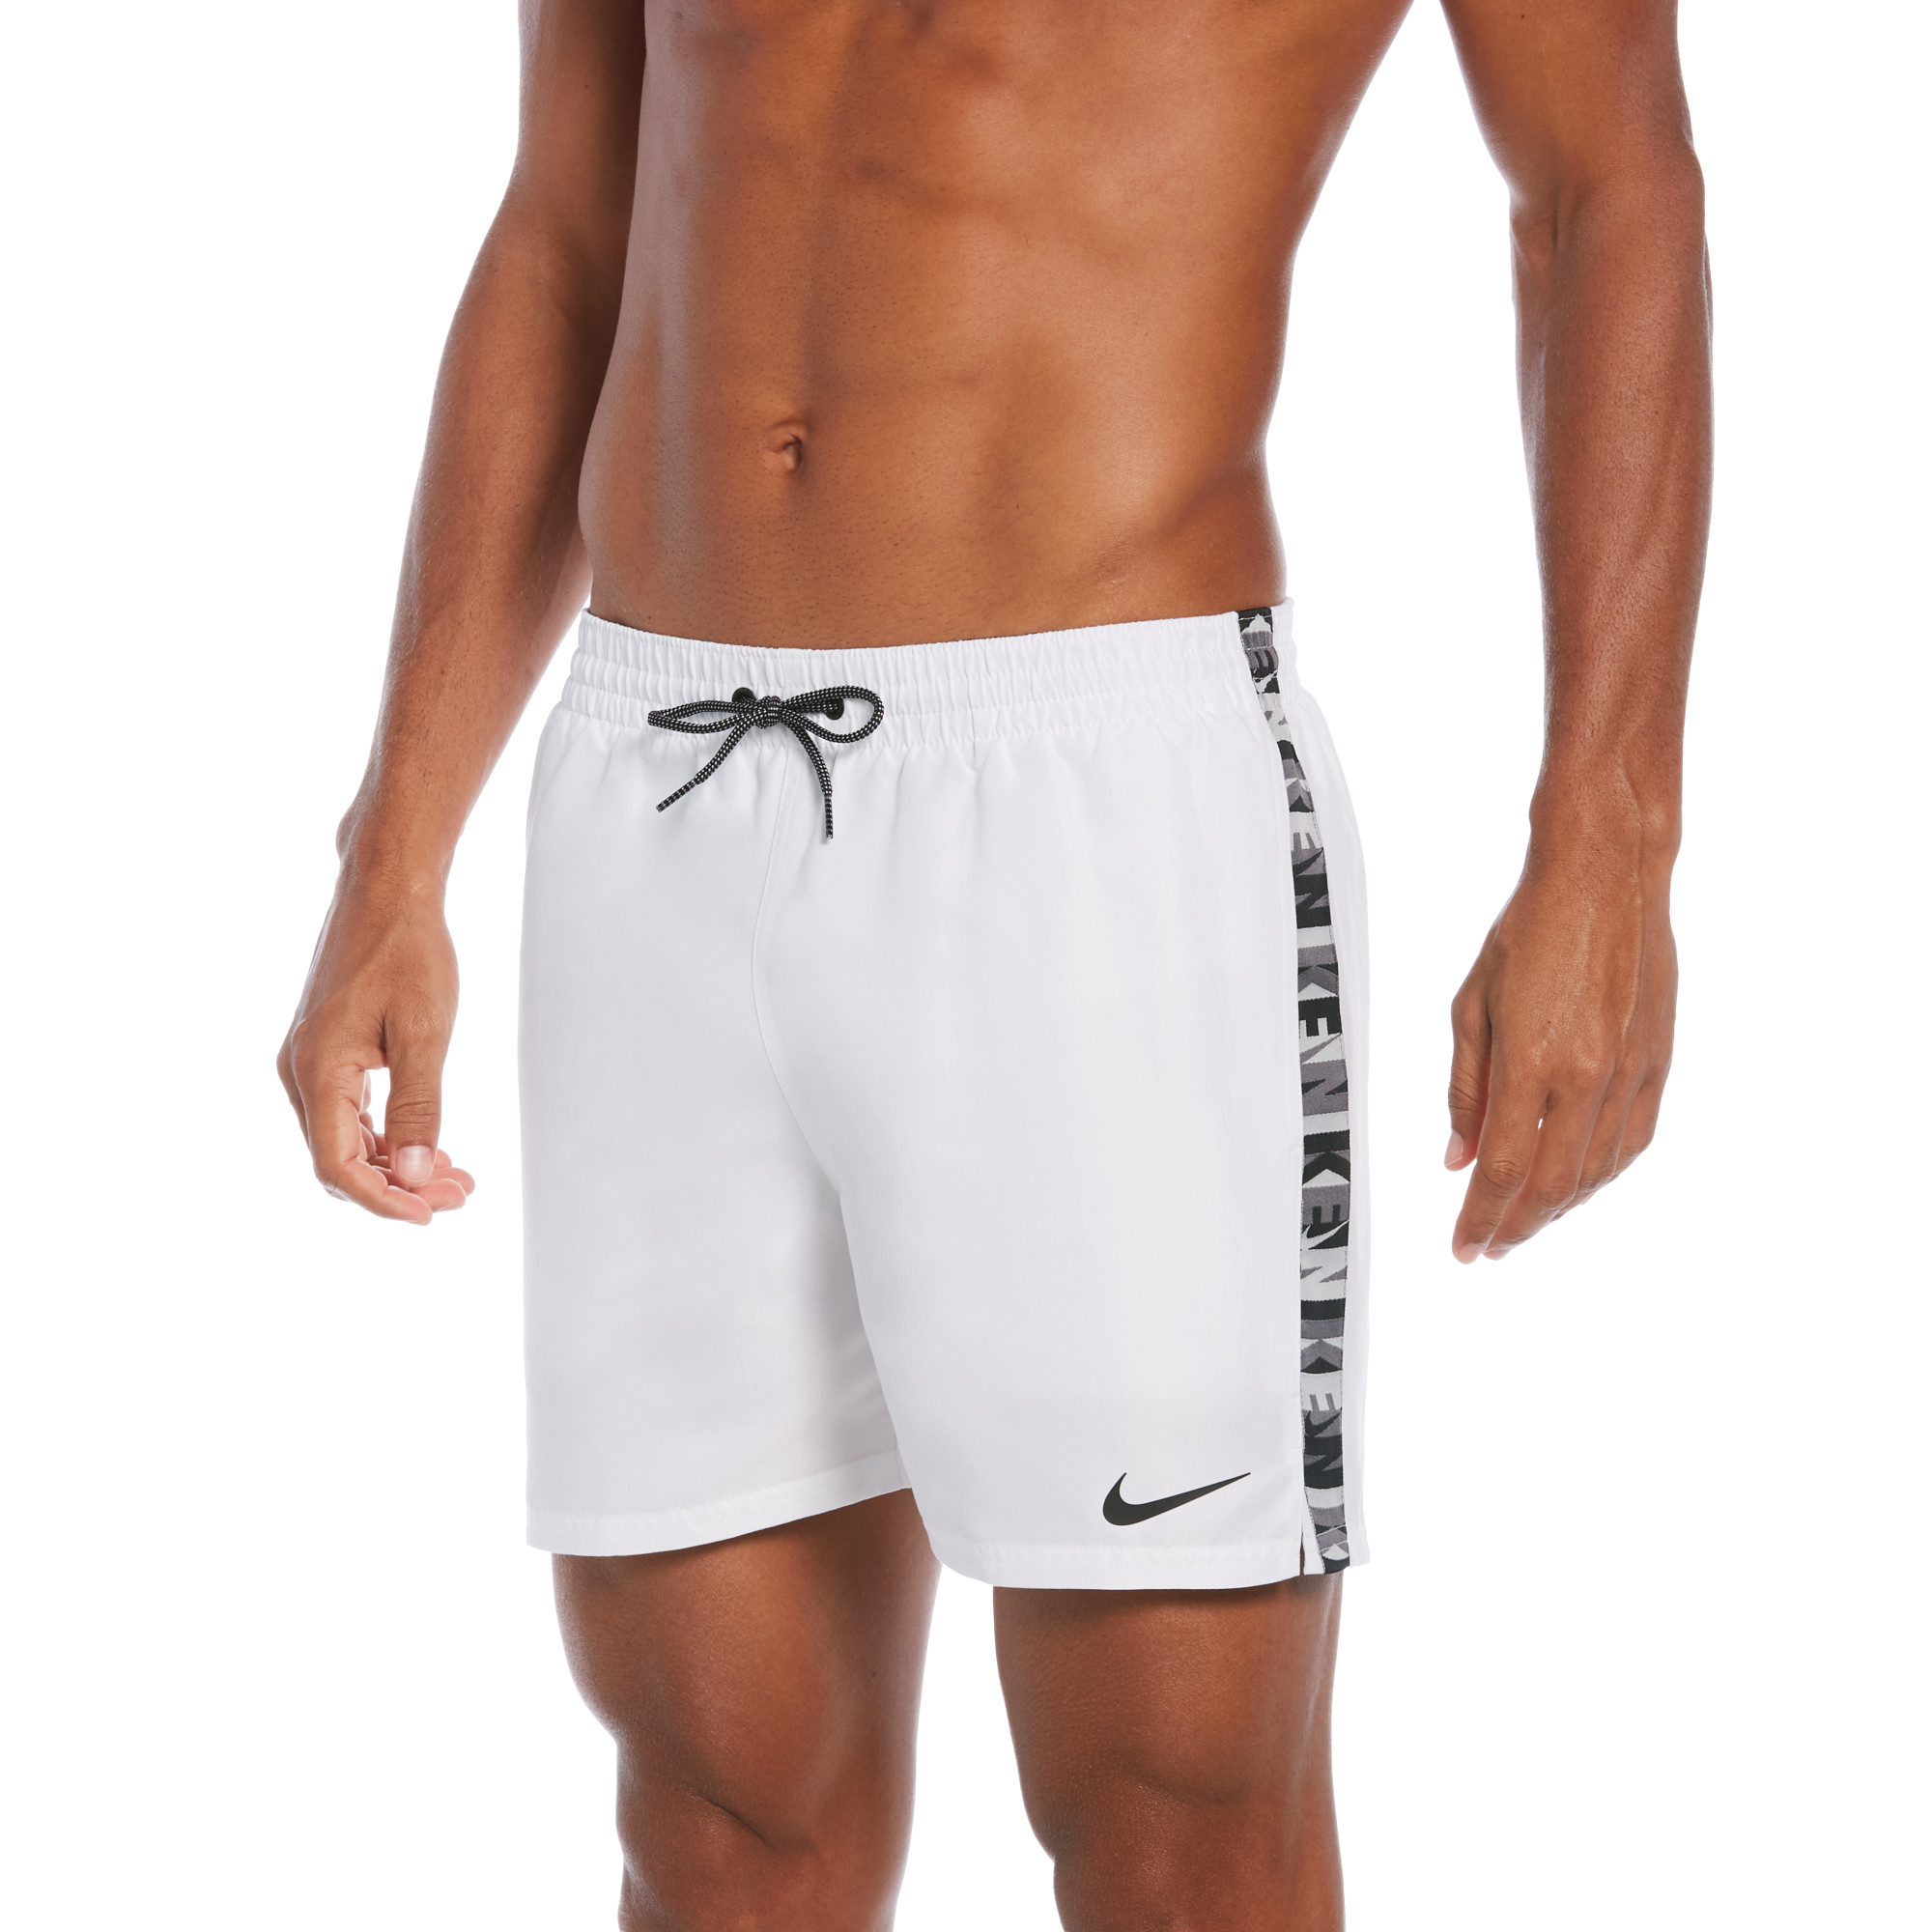 Шорты мужские Nike Swim NESSC473 белые XS